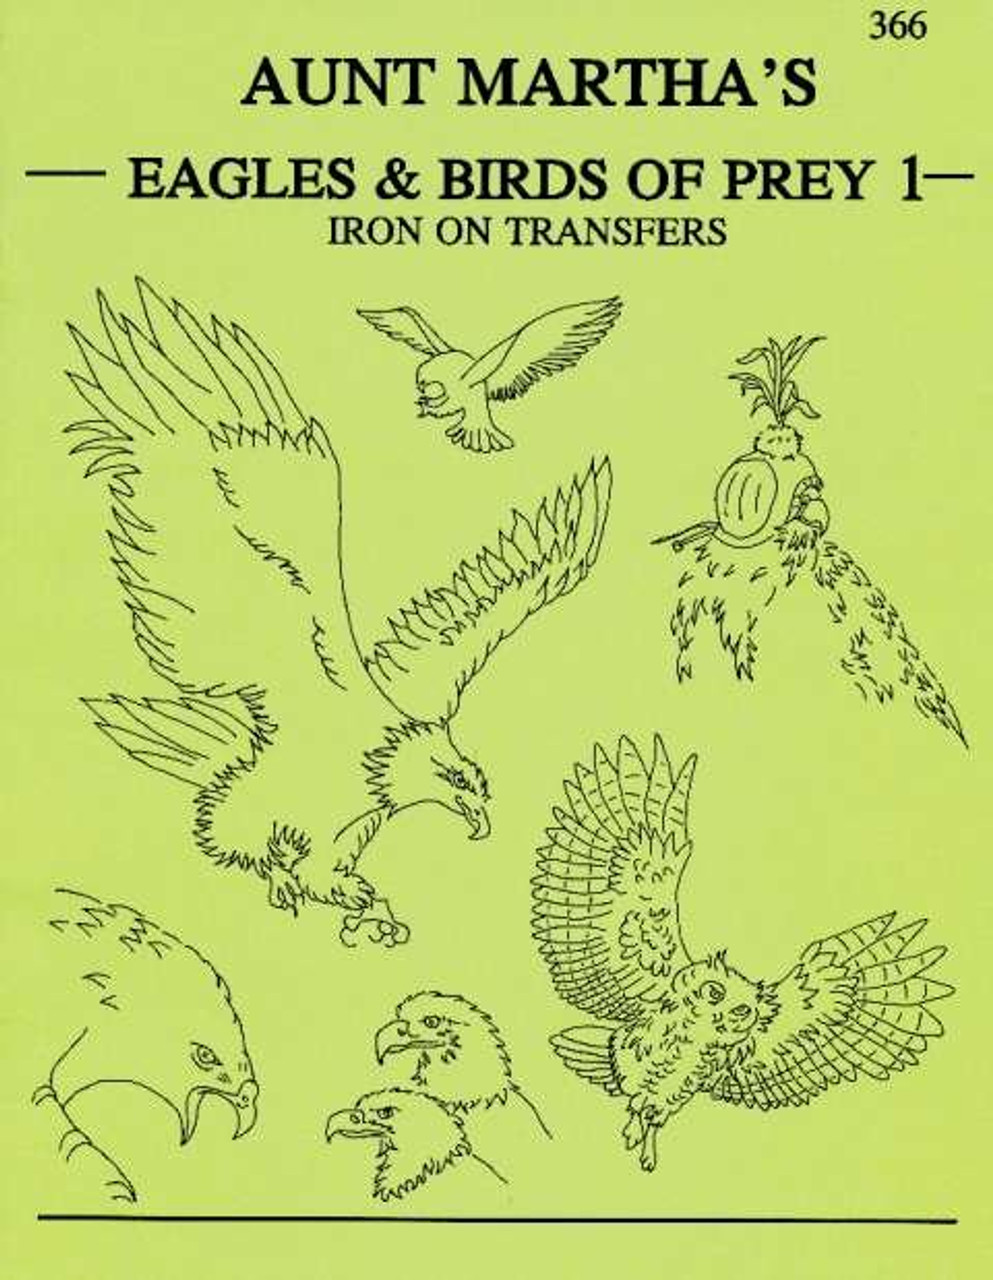 Aunt Martha's #366 Eagles & Birds of Prey